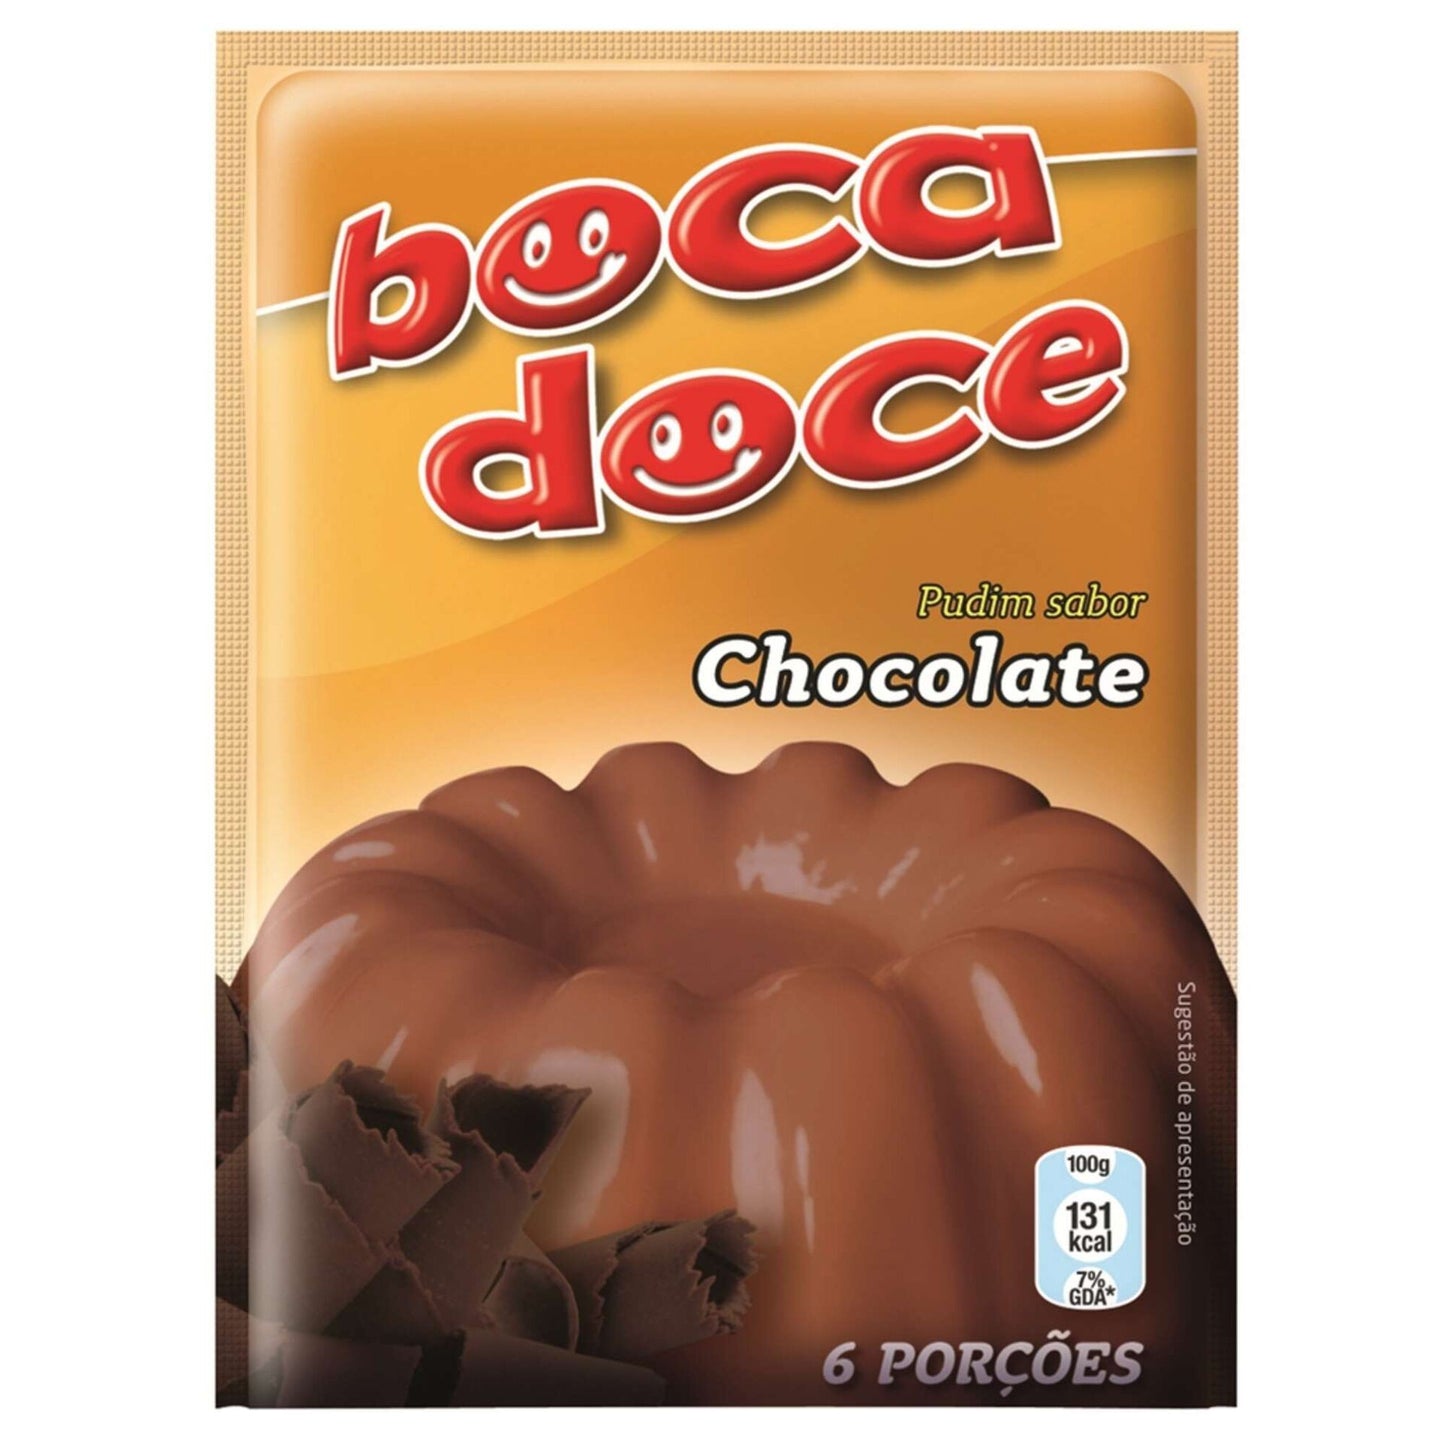 Chocolate pudding Boca Doce 22g